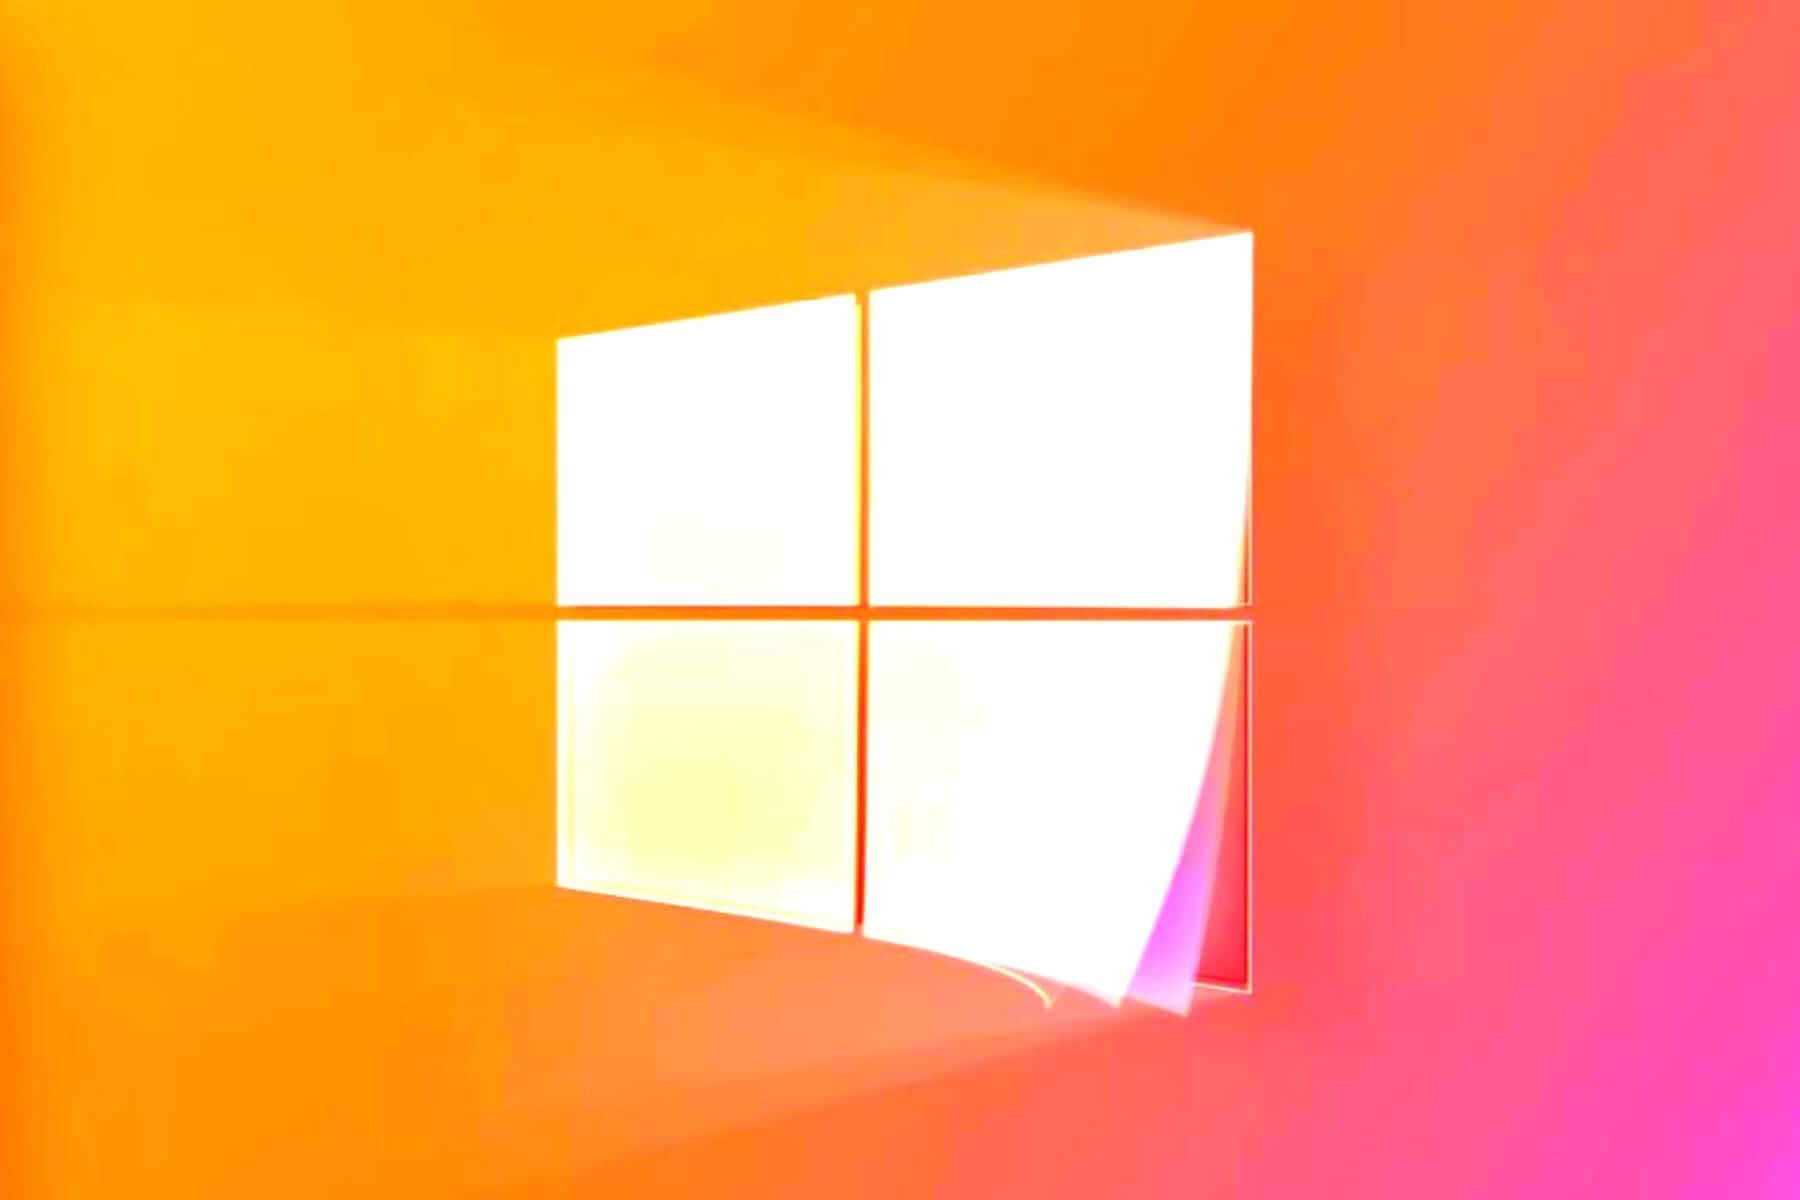 Windows 11 Wallpapers